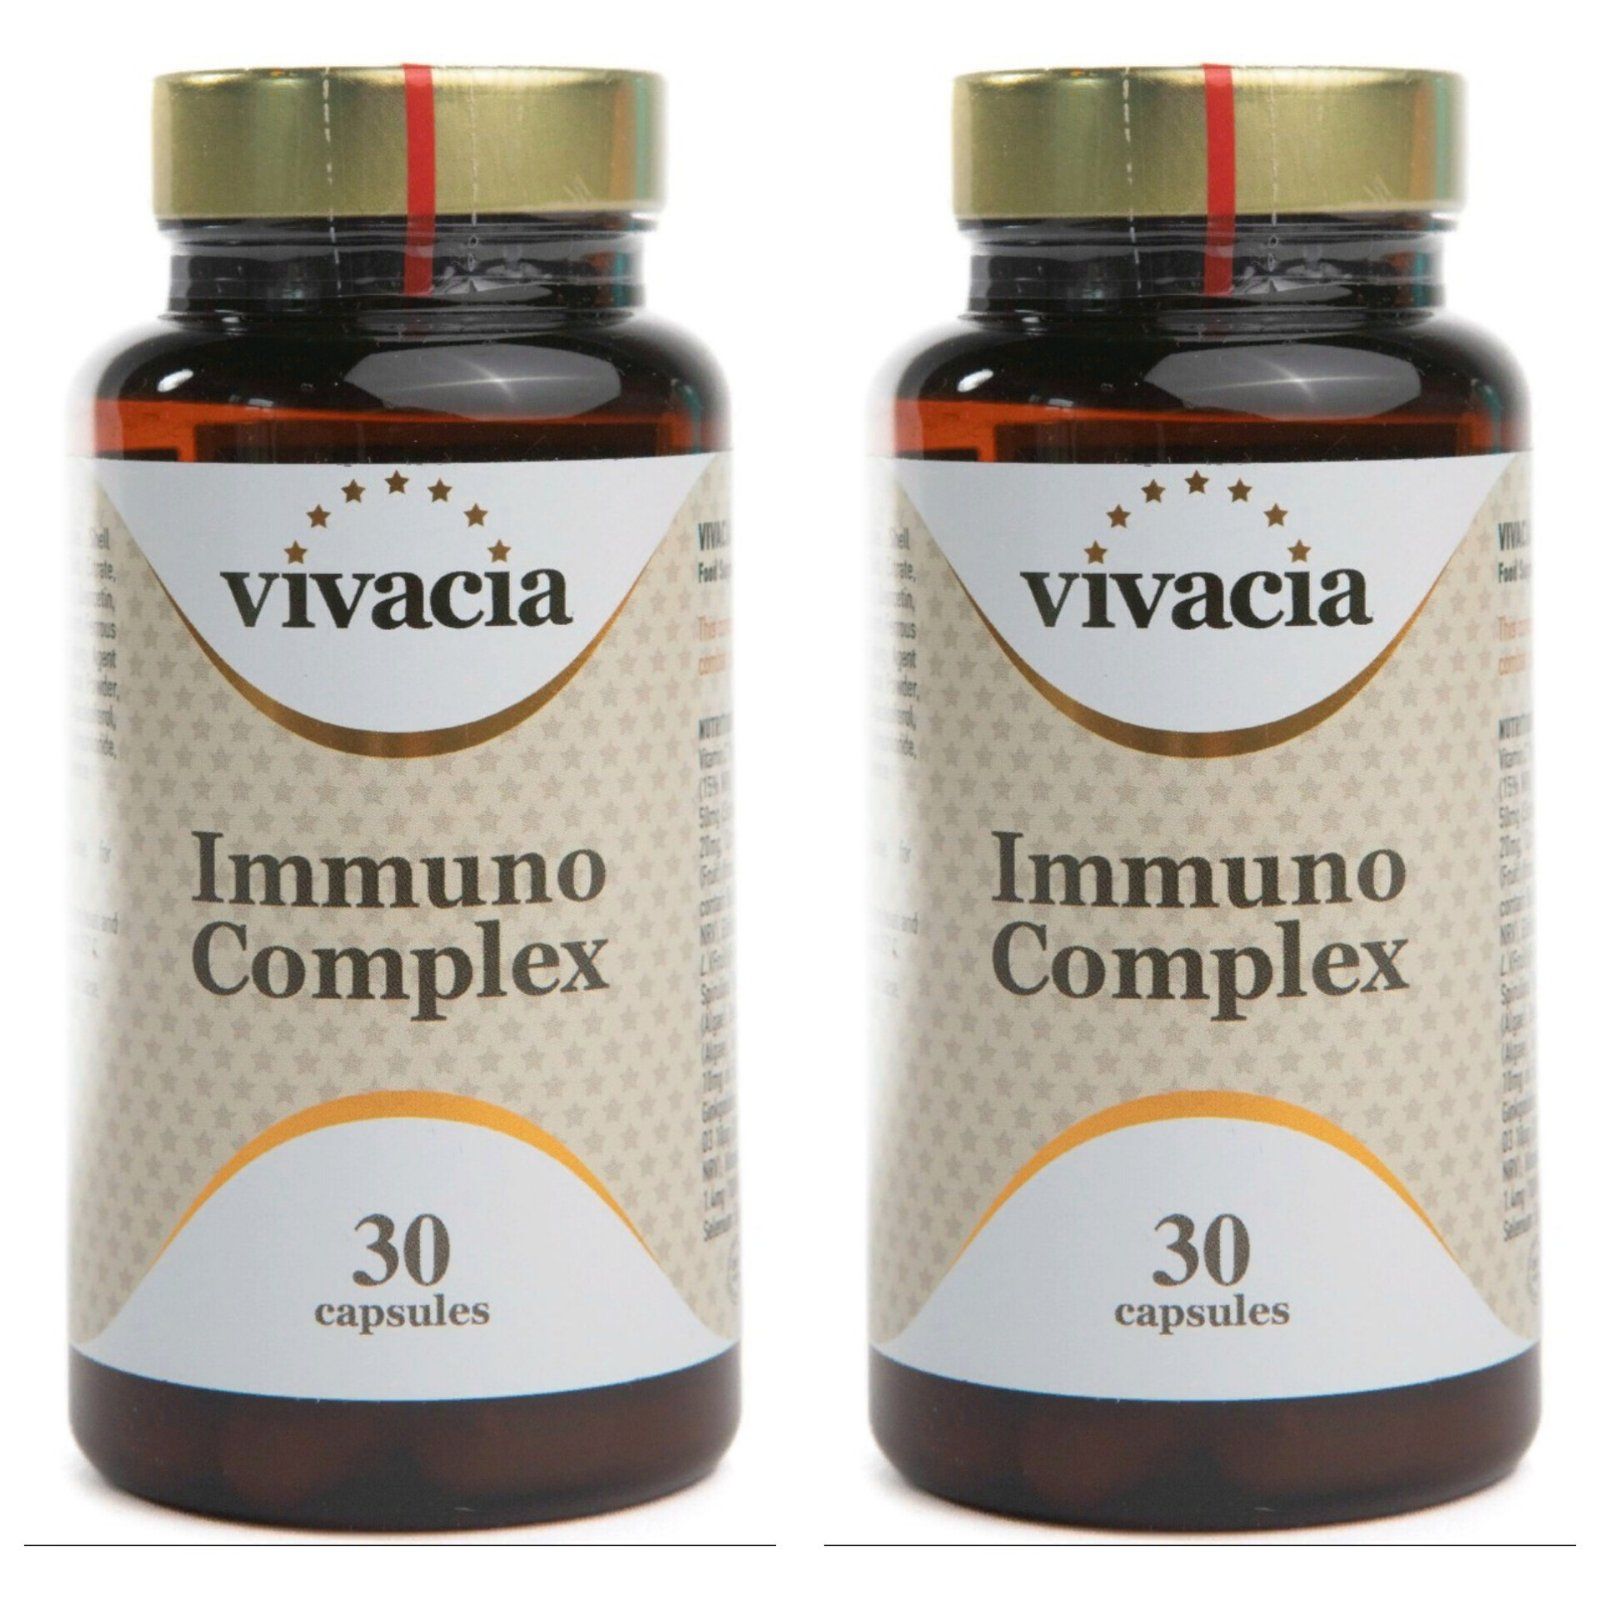 Vivacia vitamin. Vivacia Immuno Complex. Vivacia Ultra Iron Complex капсулы. Vivacia Immuno Complex отзывы. Vivacia/Вивация Multi Plus.